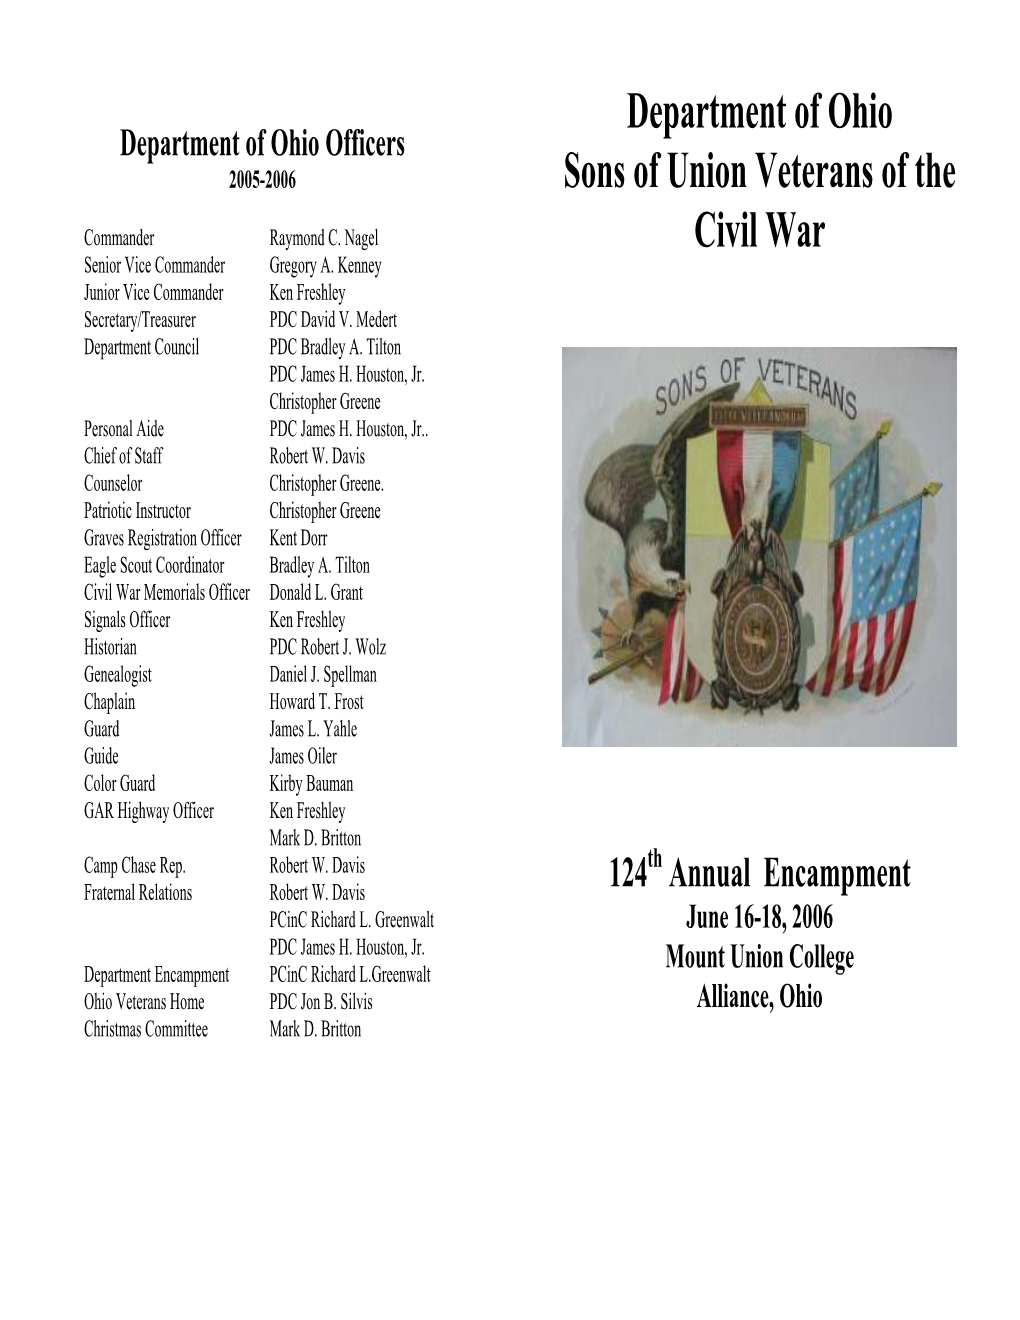 Department of Ohio Sons of Union Veterans of the Civil